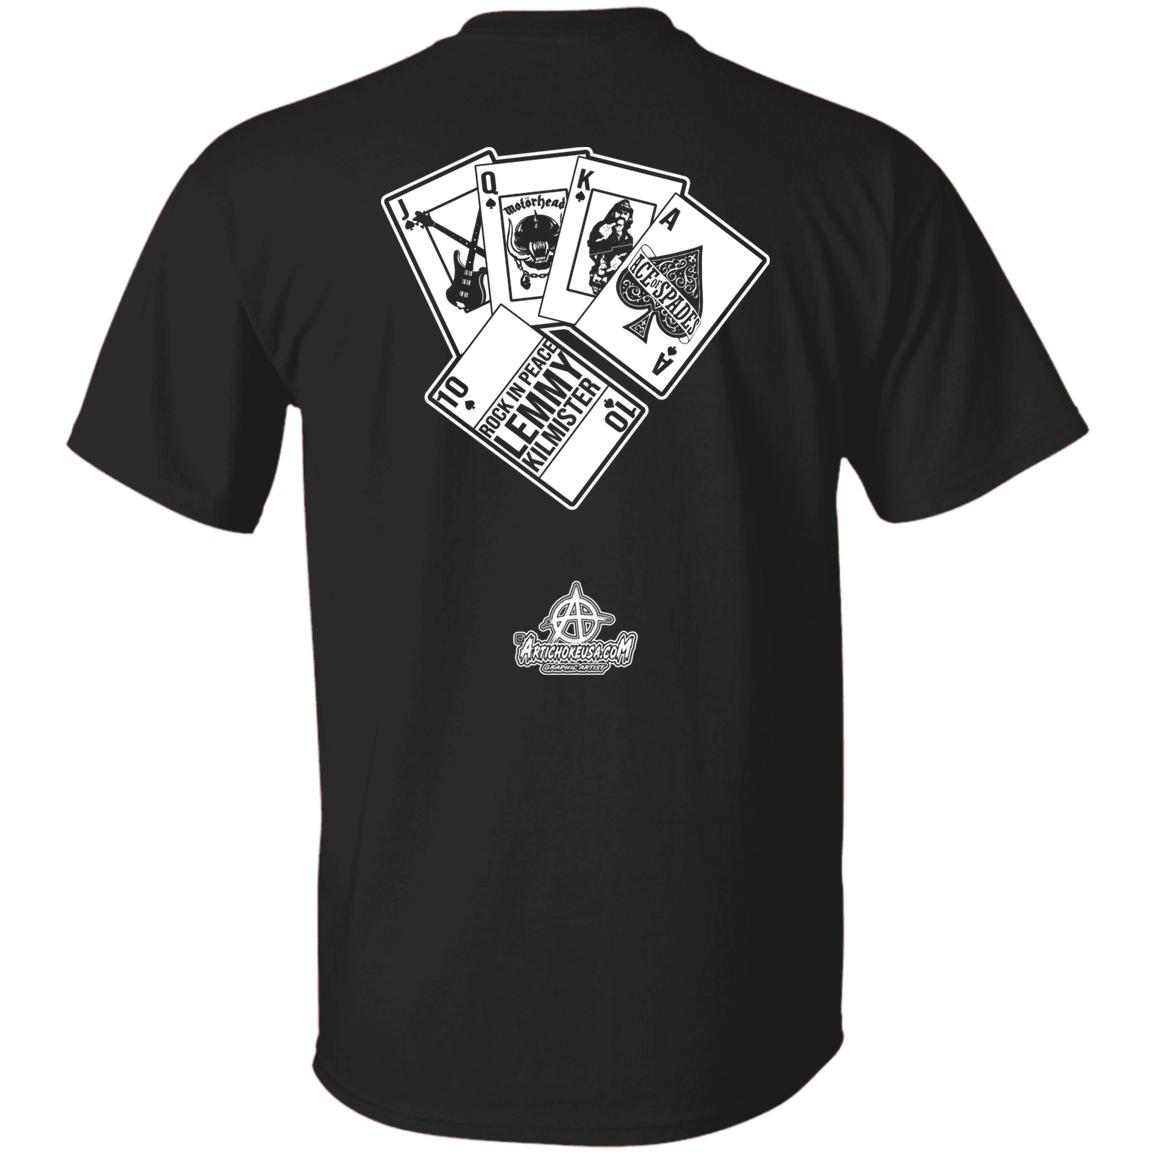 ArtichokeUSA Custom Design. Motorhead's Lemmy Kilmister's Favorite Video Poker Machine. Rock in Peace! Youth 5.3 oz 100% Cotton T-Shirt